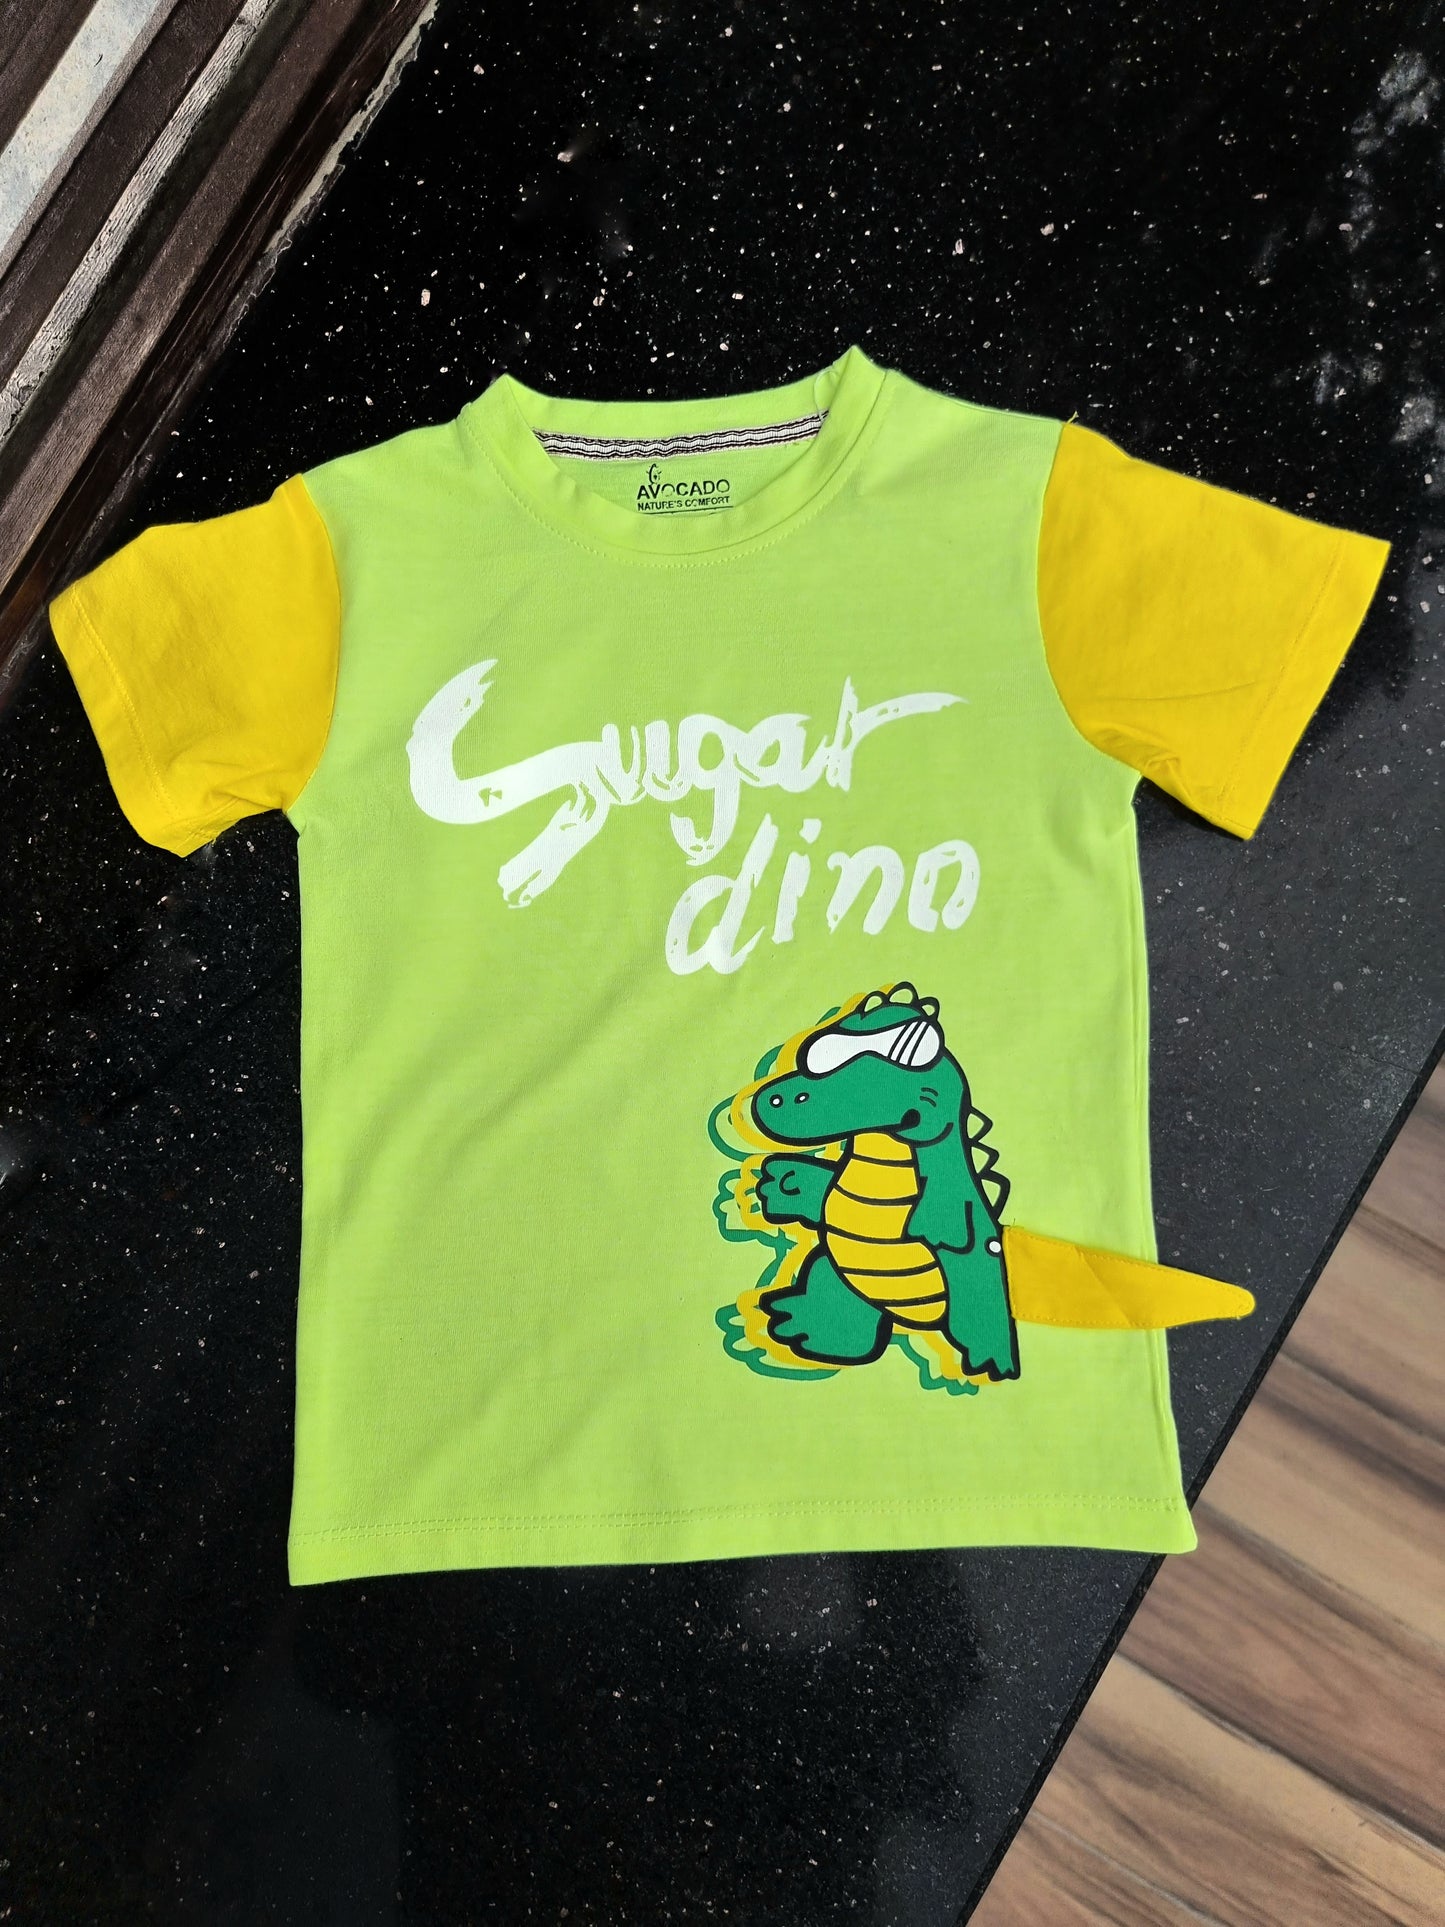 Sugar Daino T-shirt